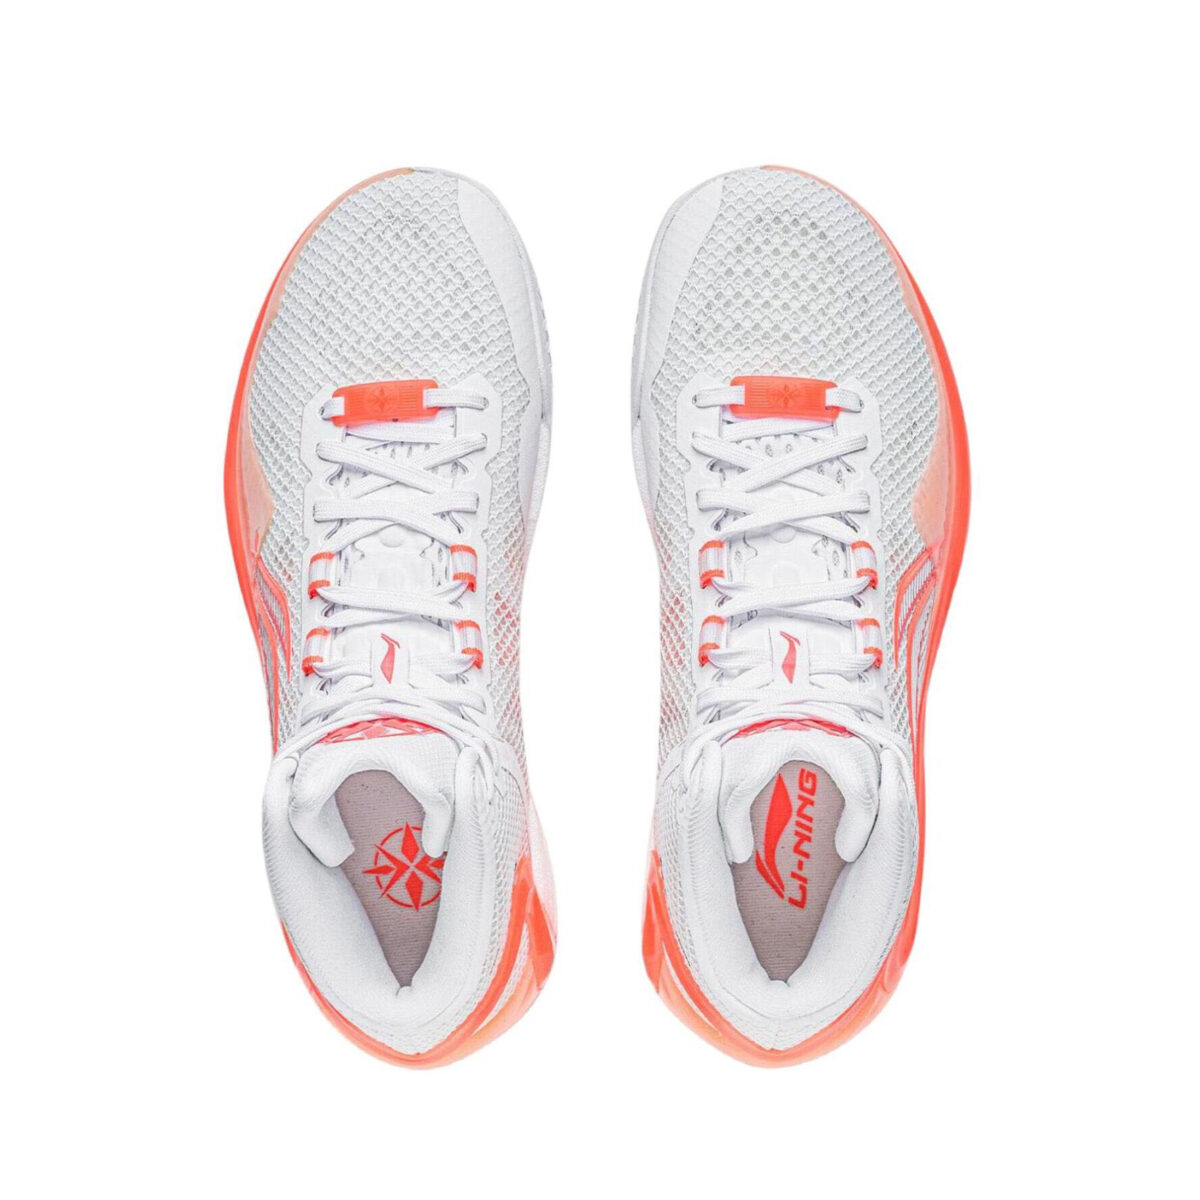 Li-Ning LiRen 4 High “First generation” Premium Boom Basketball Shoes ...